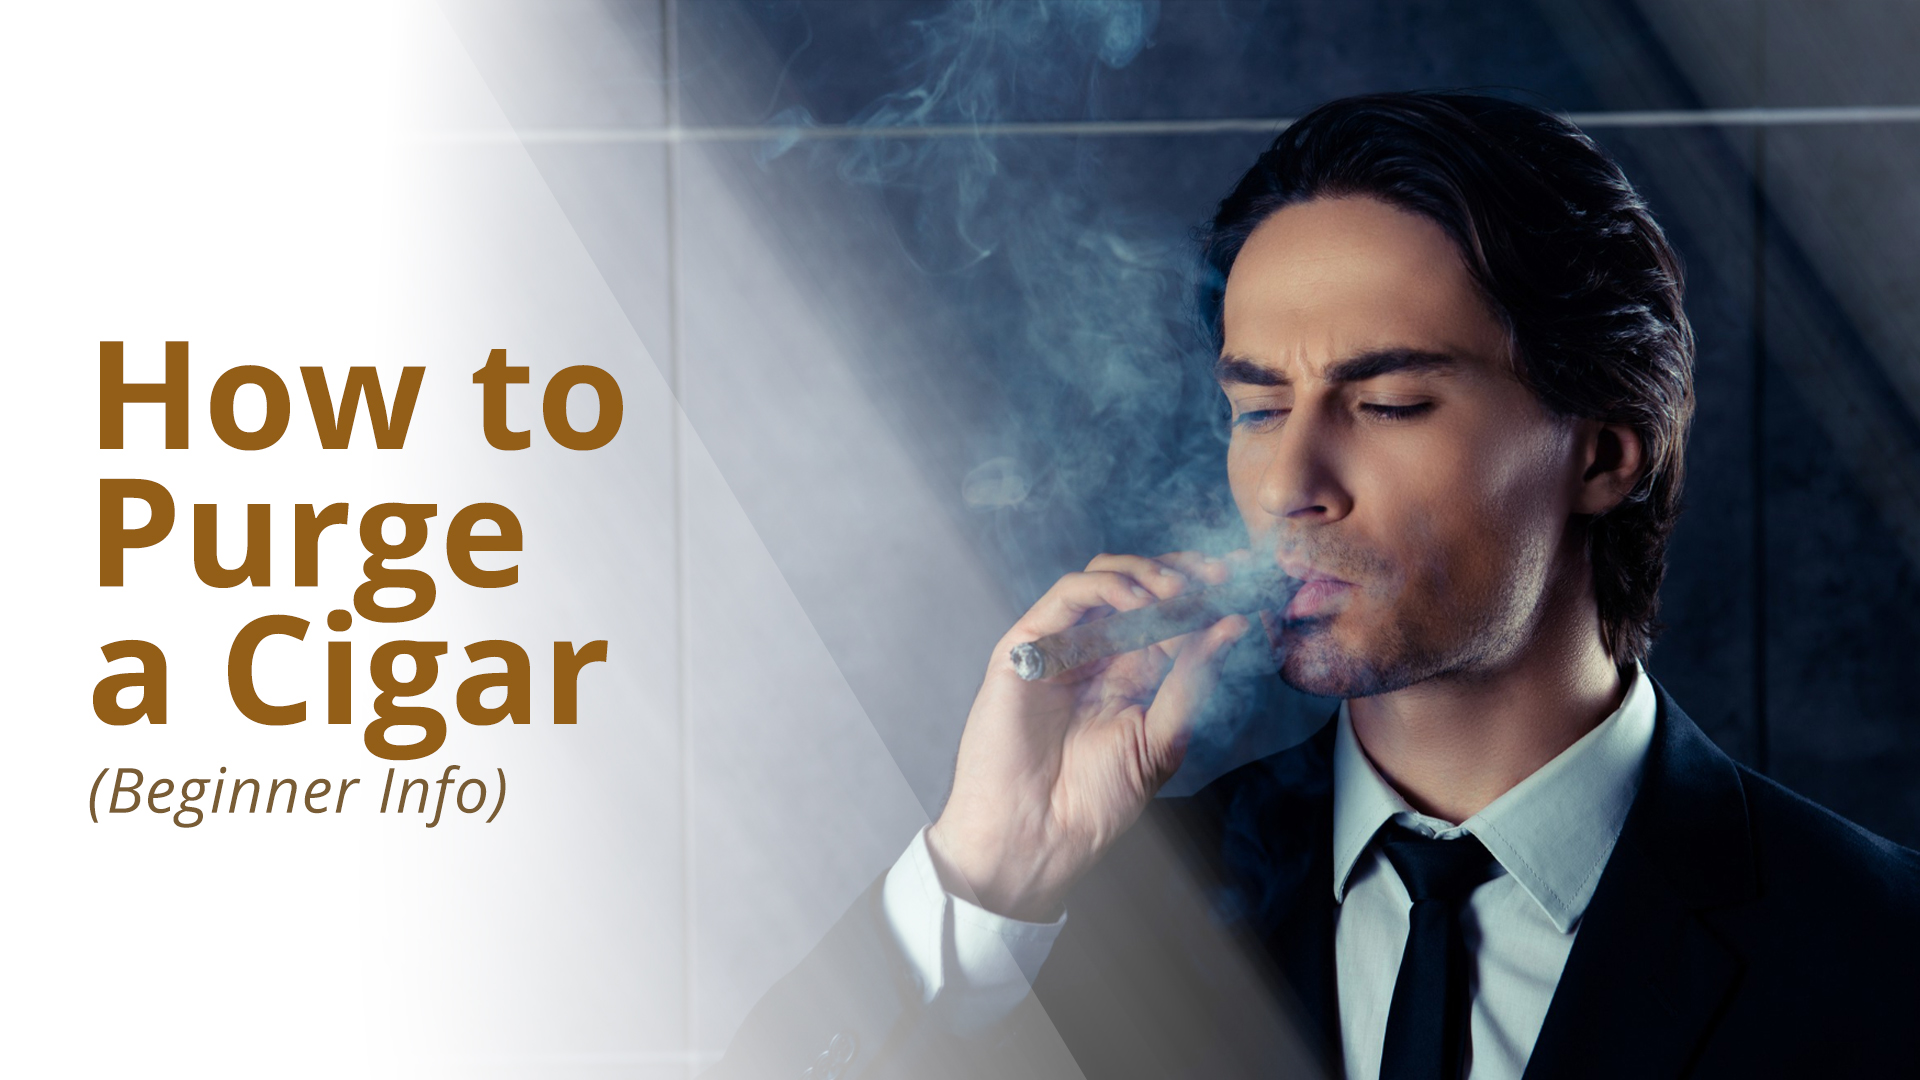 How to purge a cigar